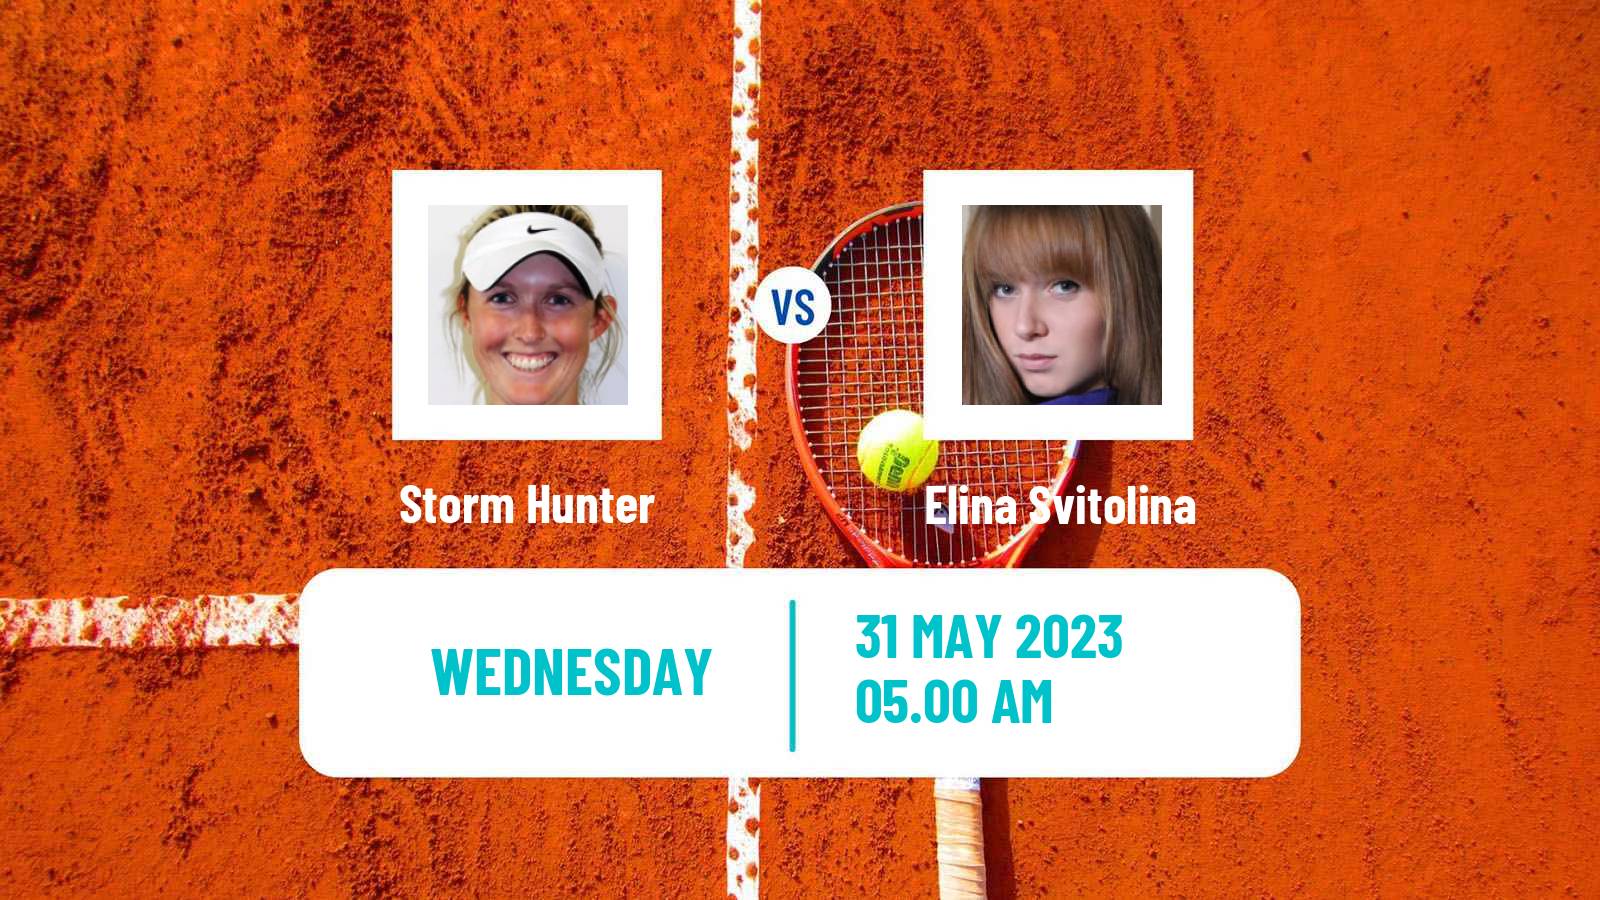 Tennis WTA Roland Garros Storm Hunter - Elina Svitolina